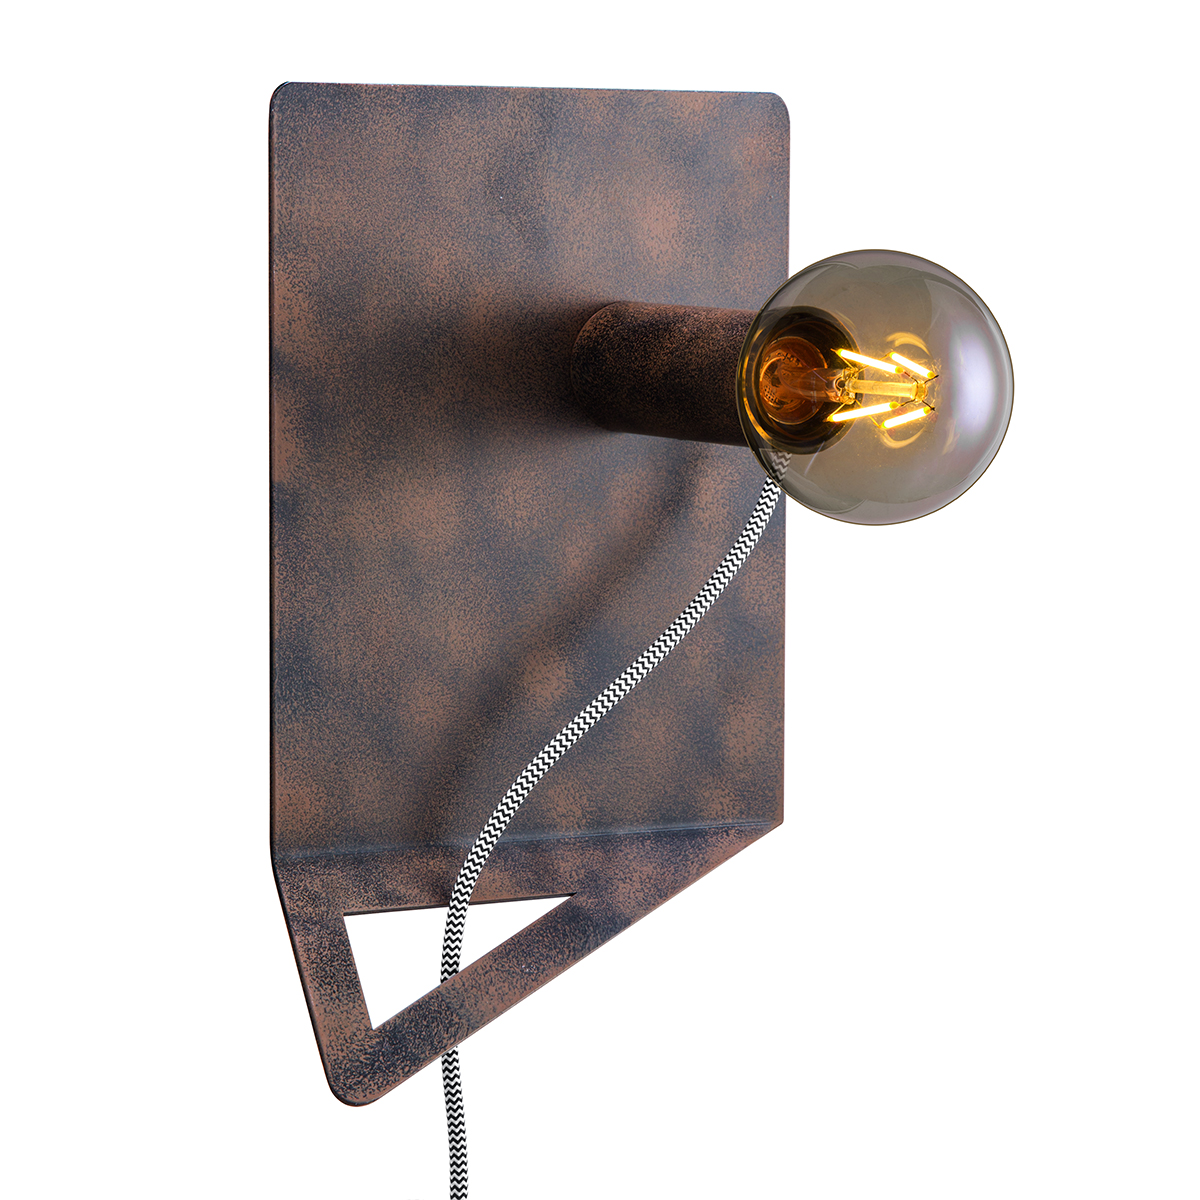 Tangla lighting - TLW7079-01RS - LED Wall lamp 1 Light - metal - rusty - film - E27